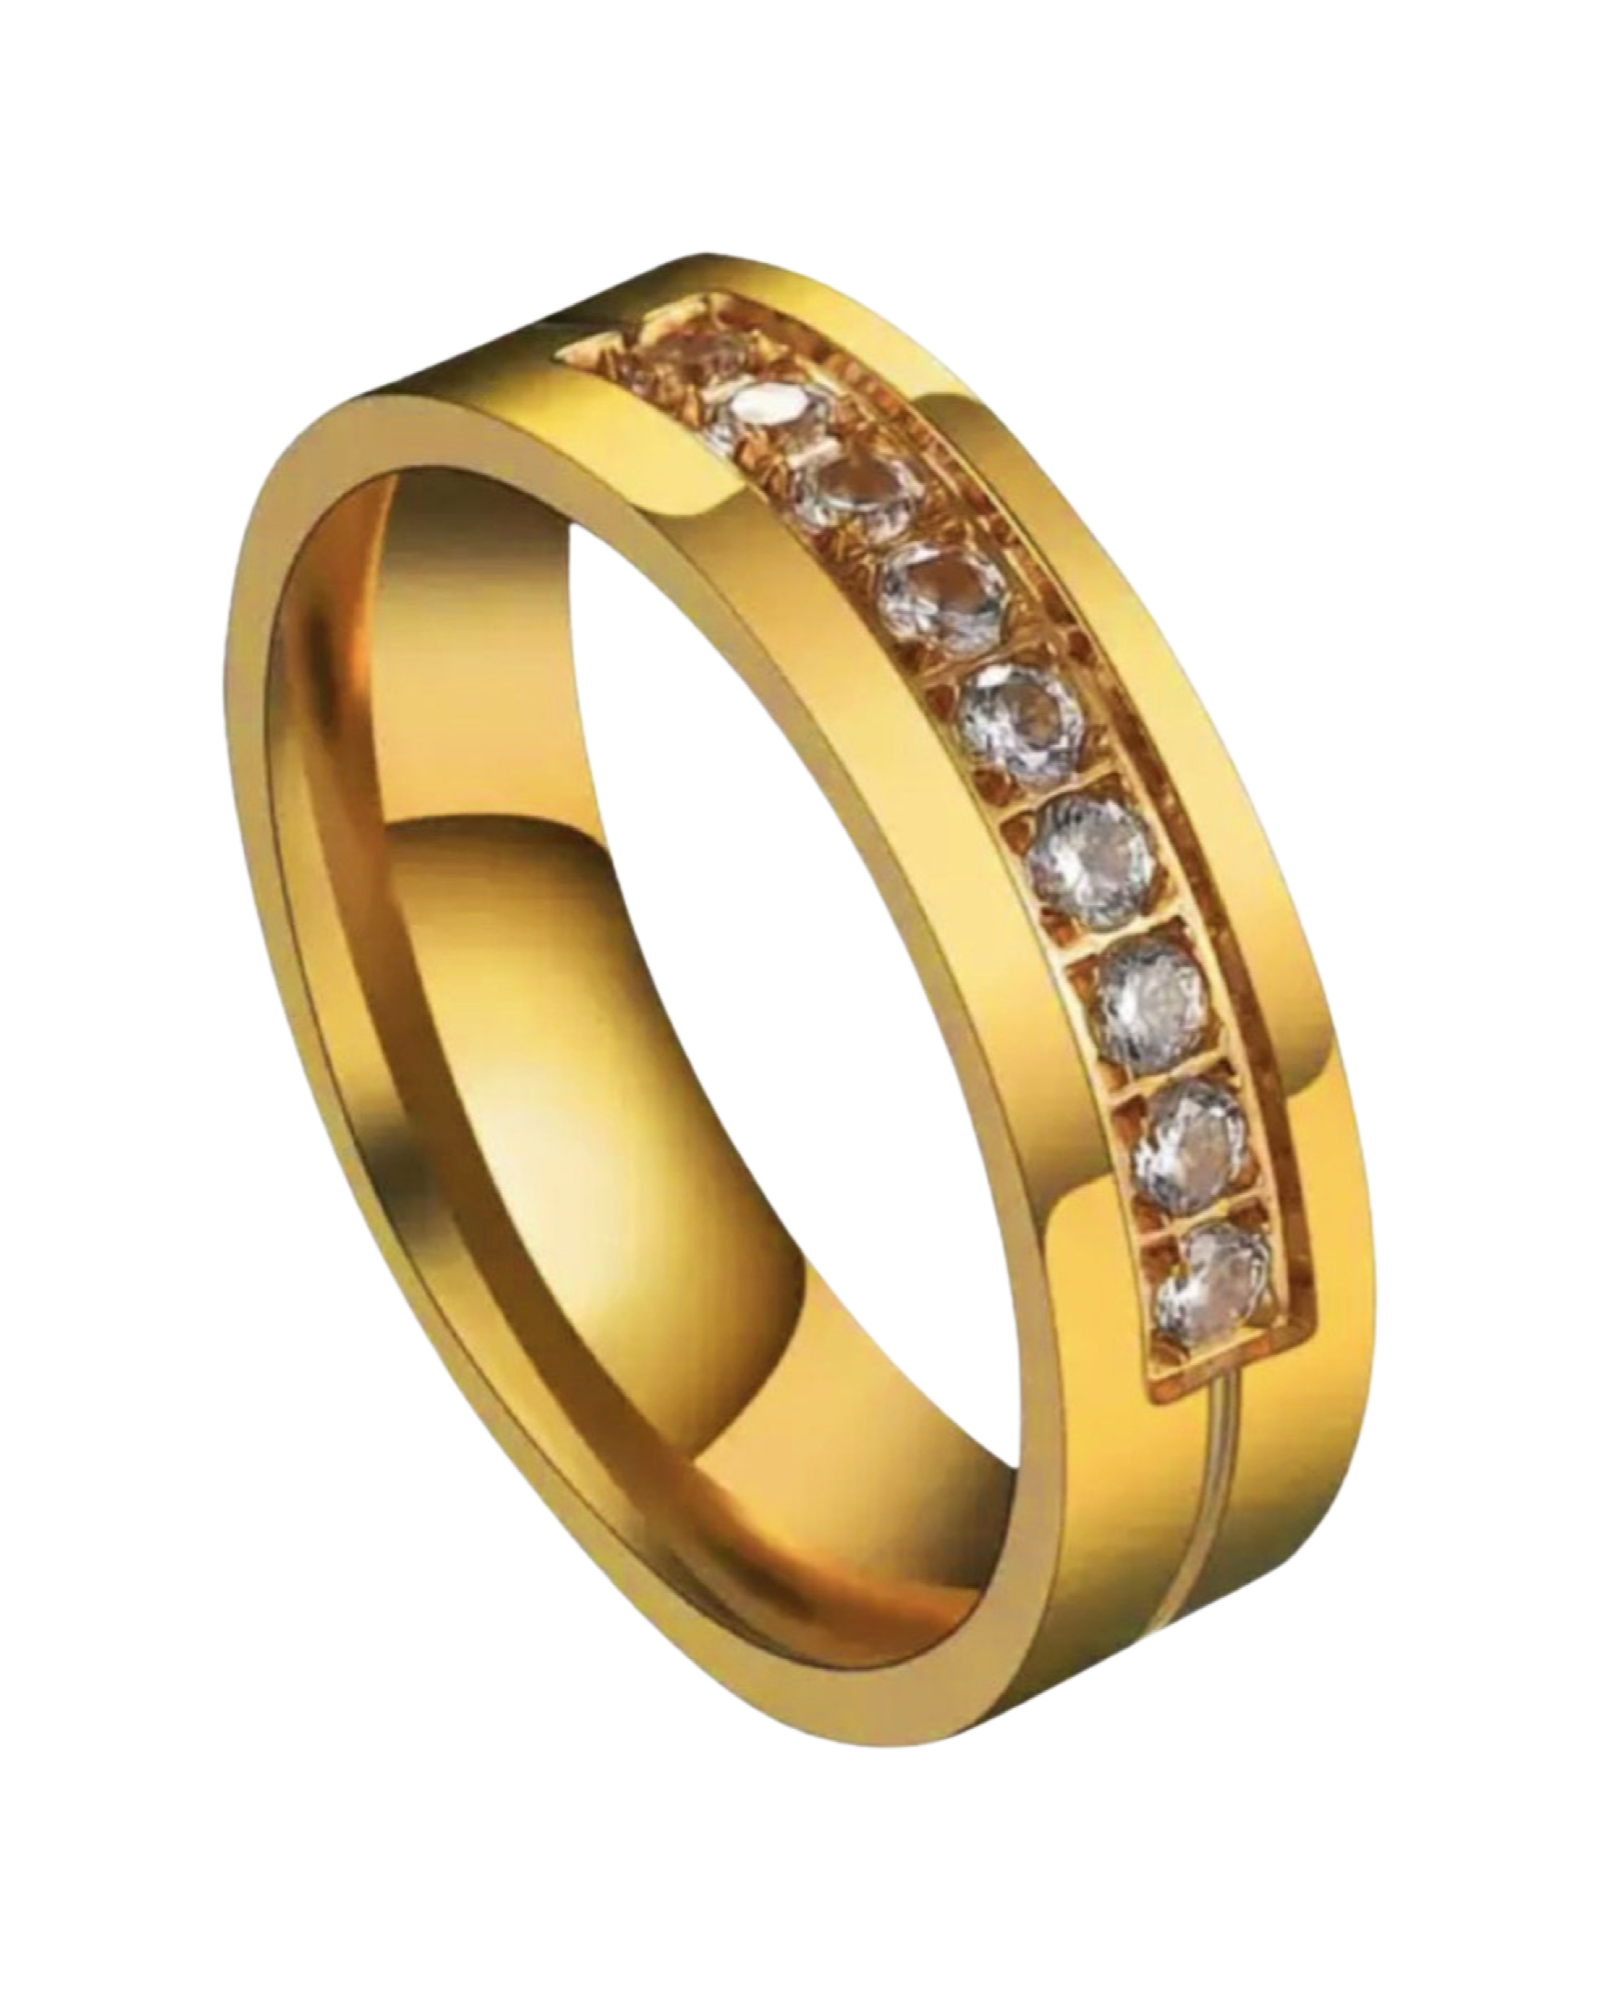 24k gold band ring